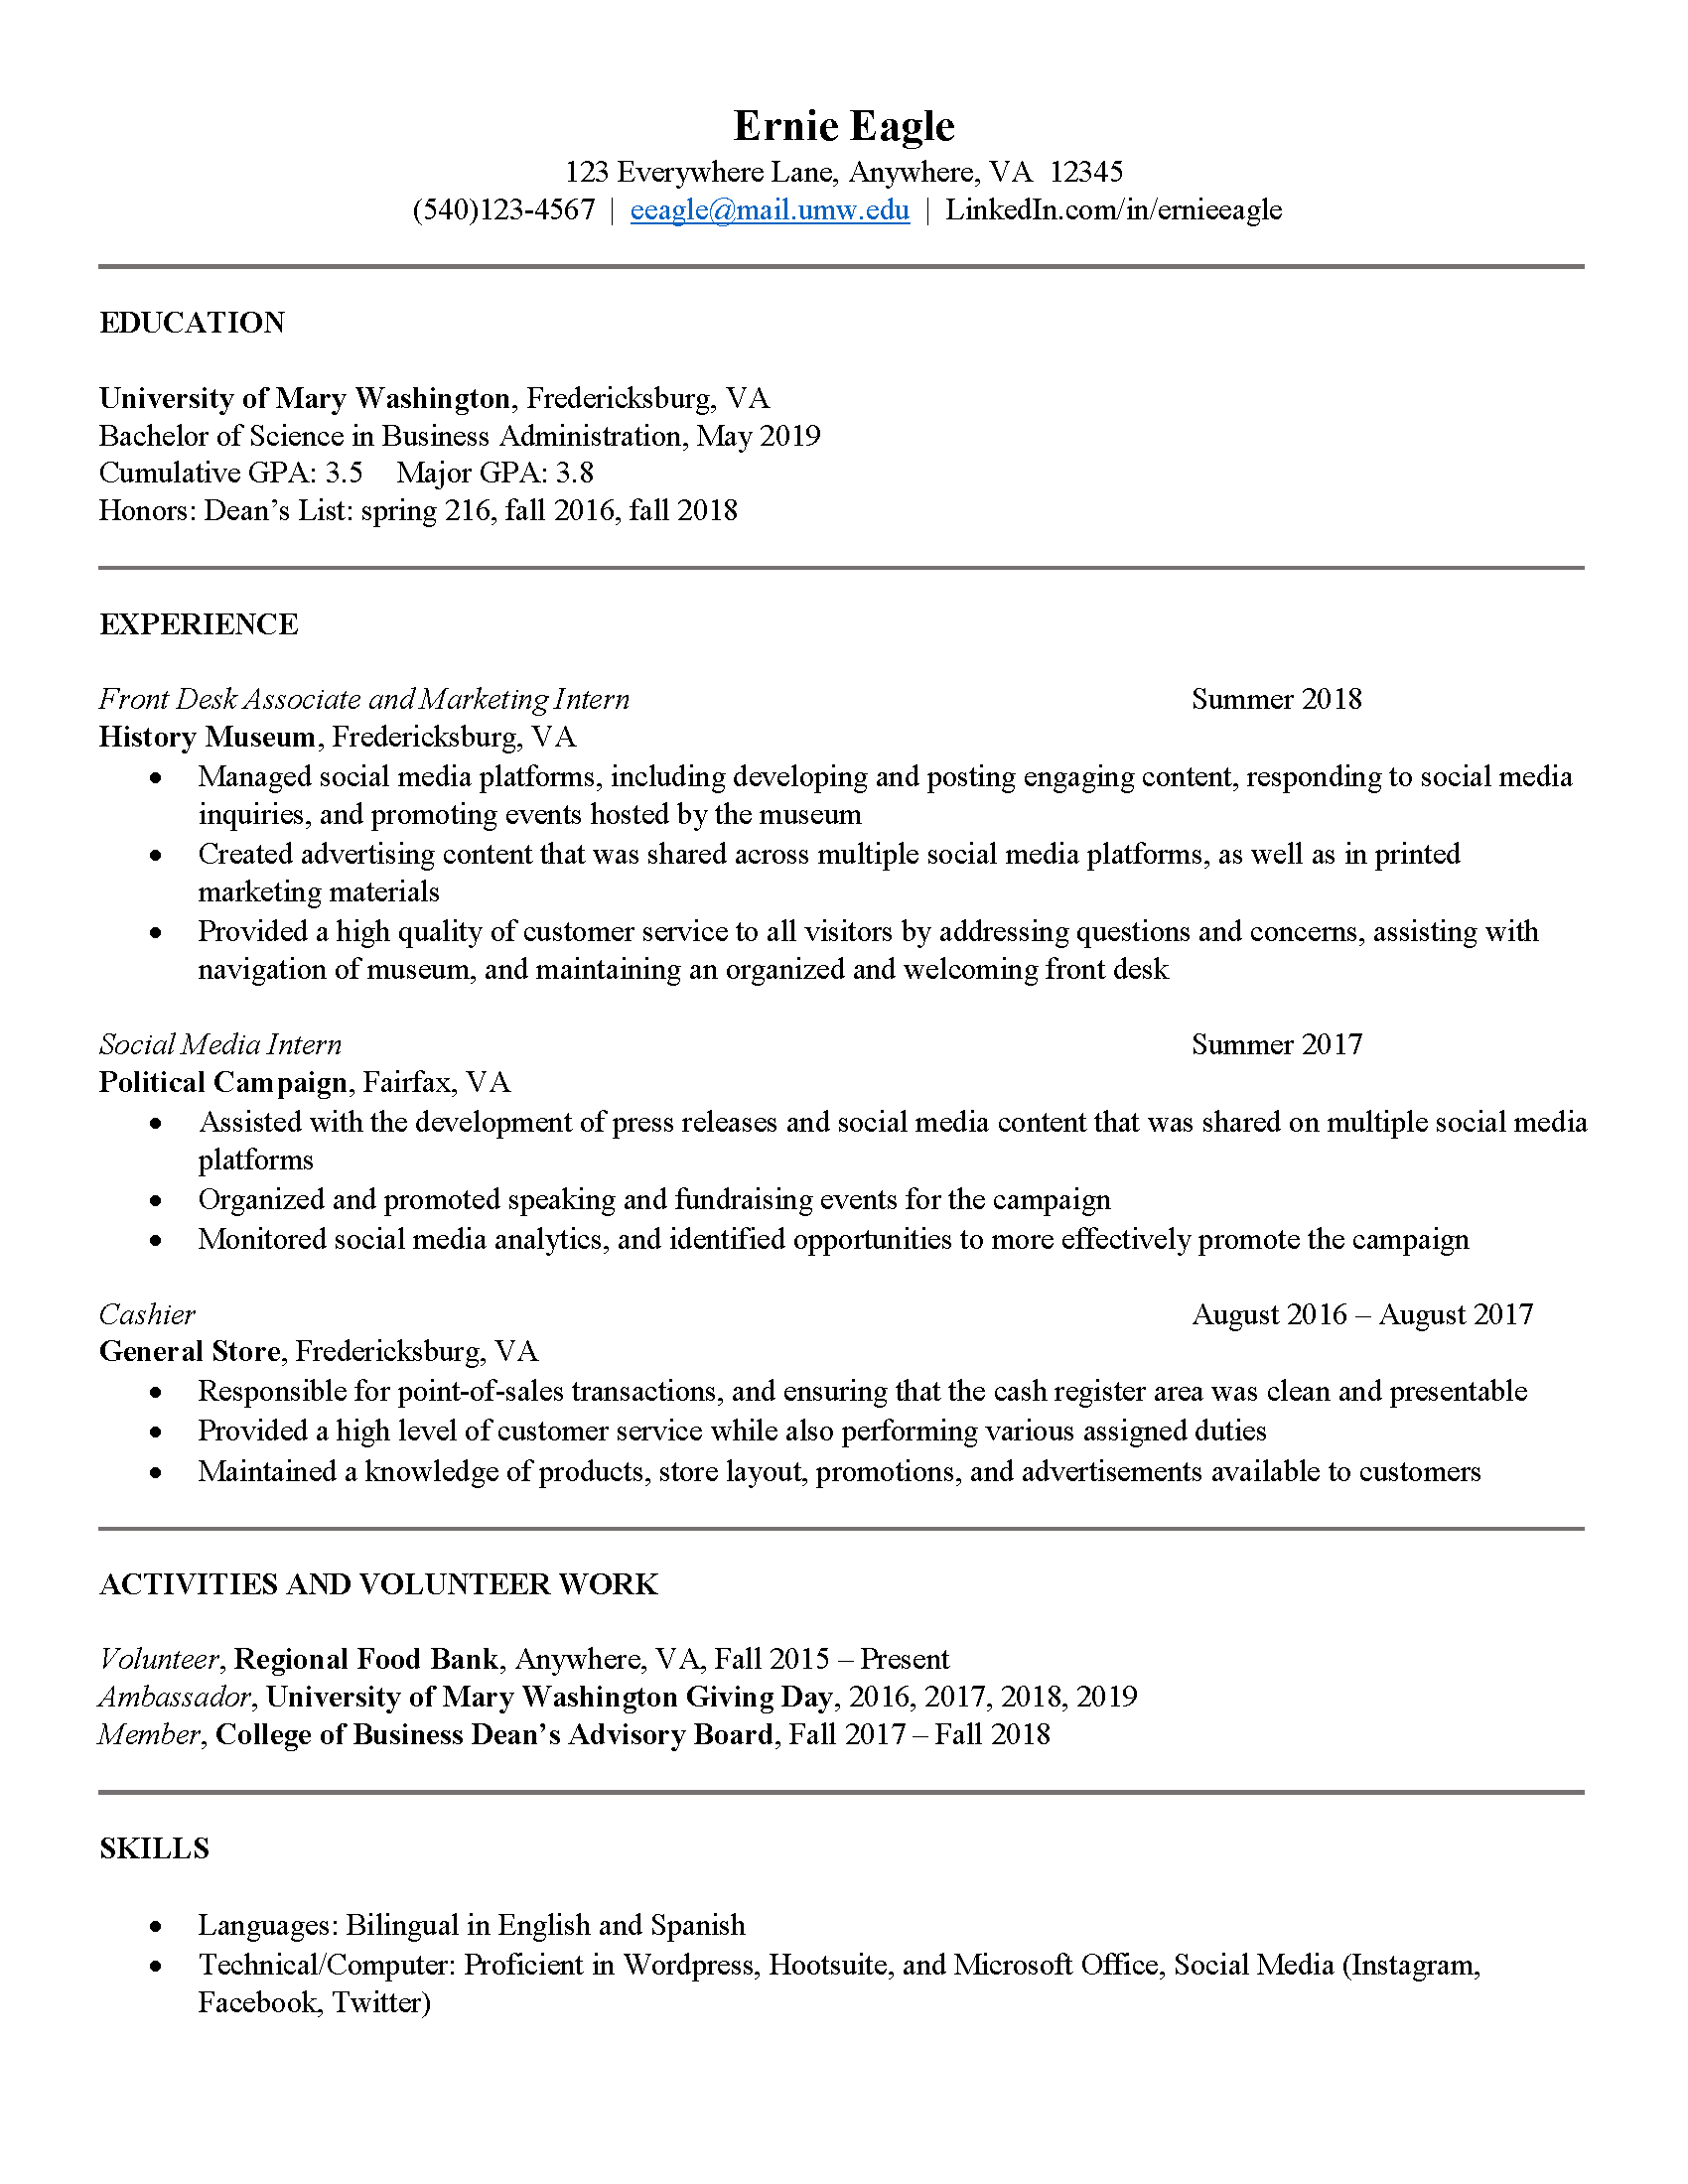 usc career center resume review